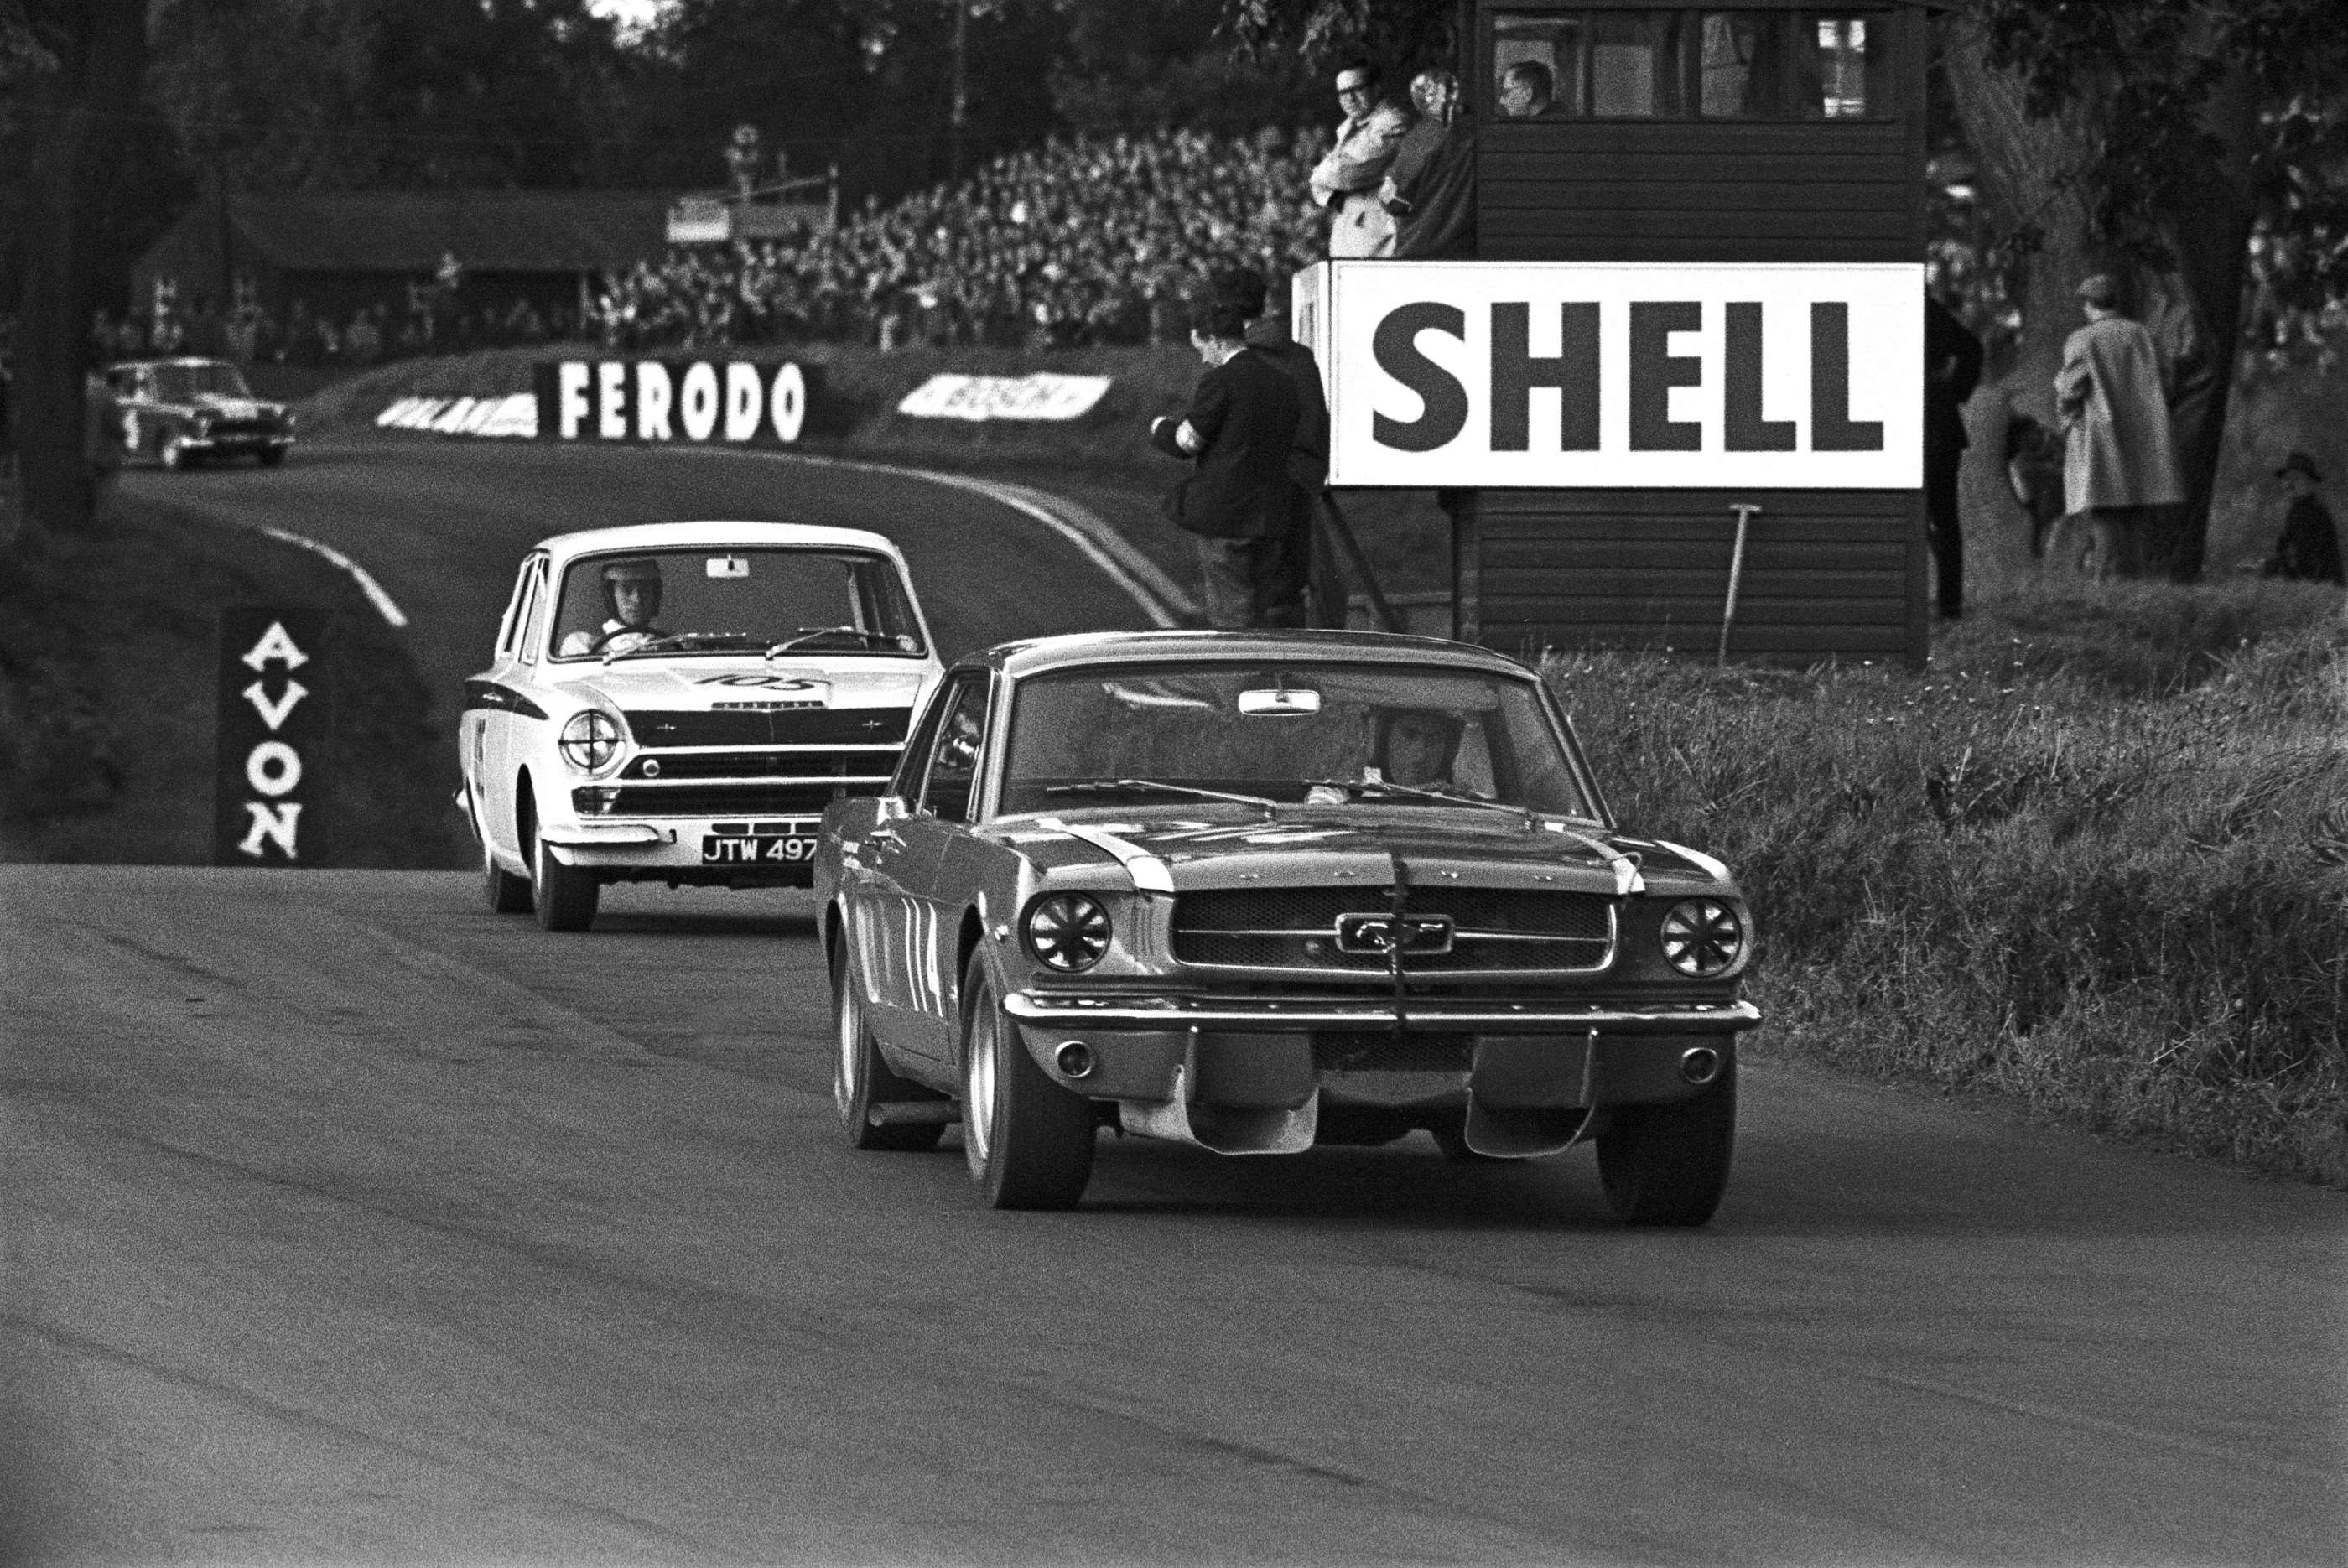 Brabham (Mustang) leading Clark (Cortina) at Oulton Park